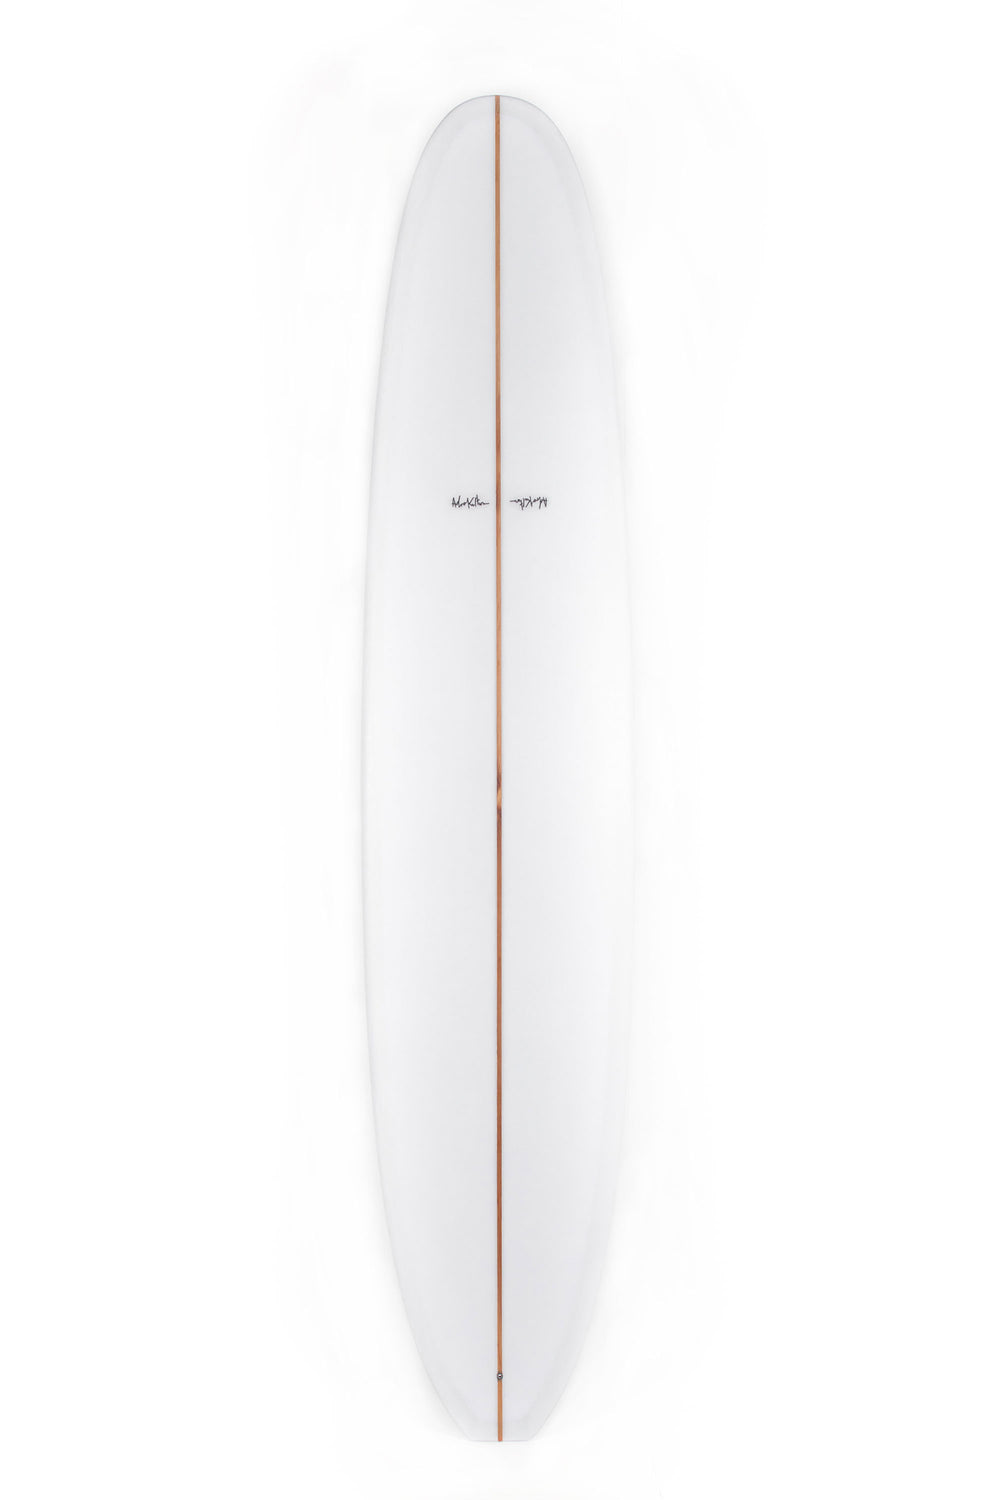 Pukas Surf Shop - Adrokultura Surfboards - BOB'S - 9'2